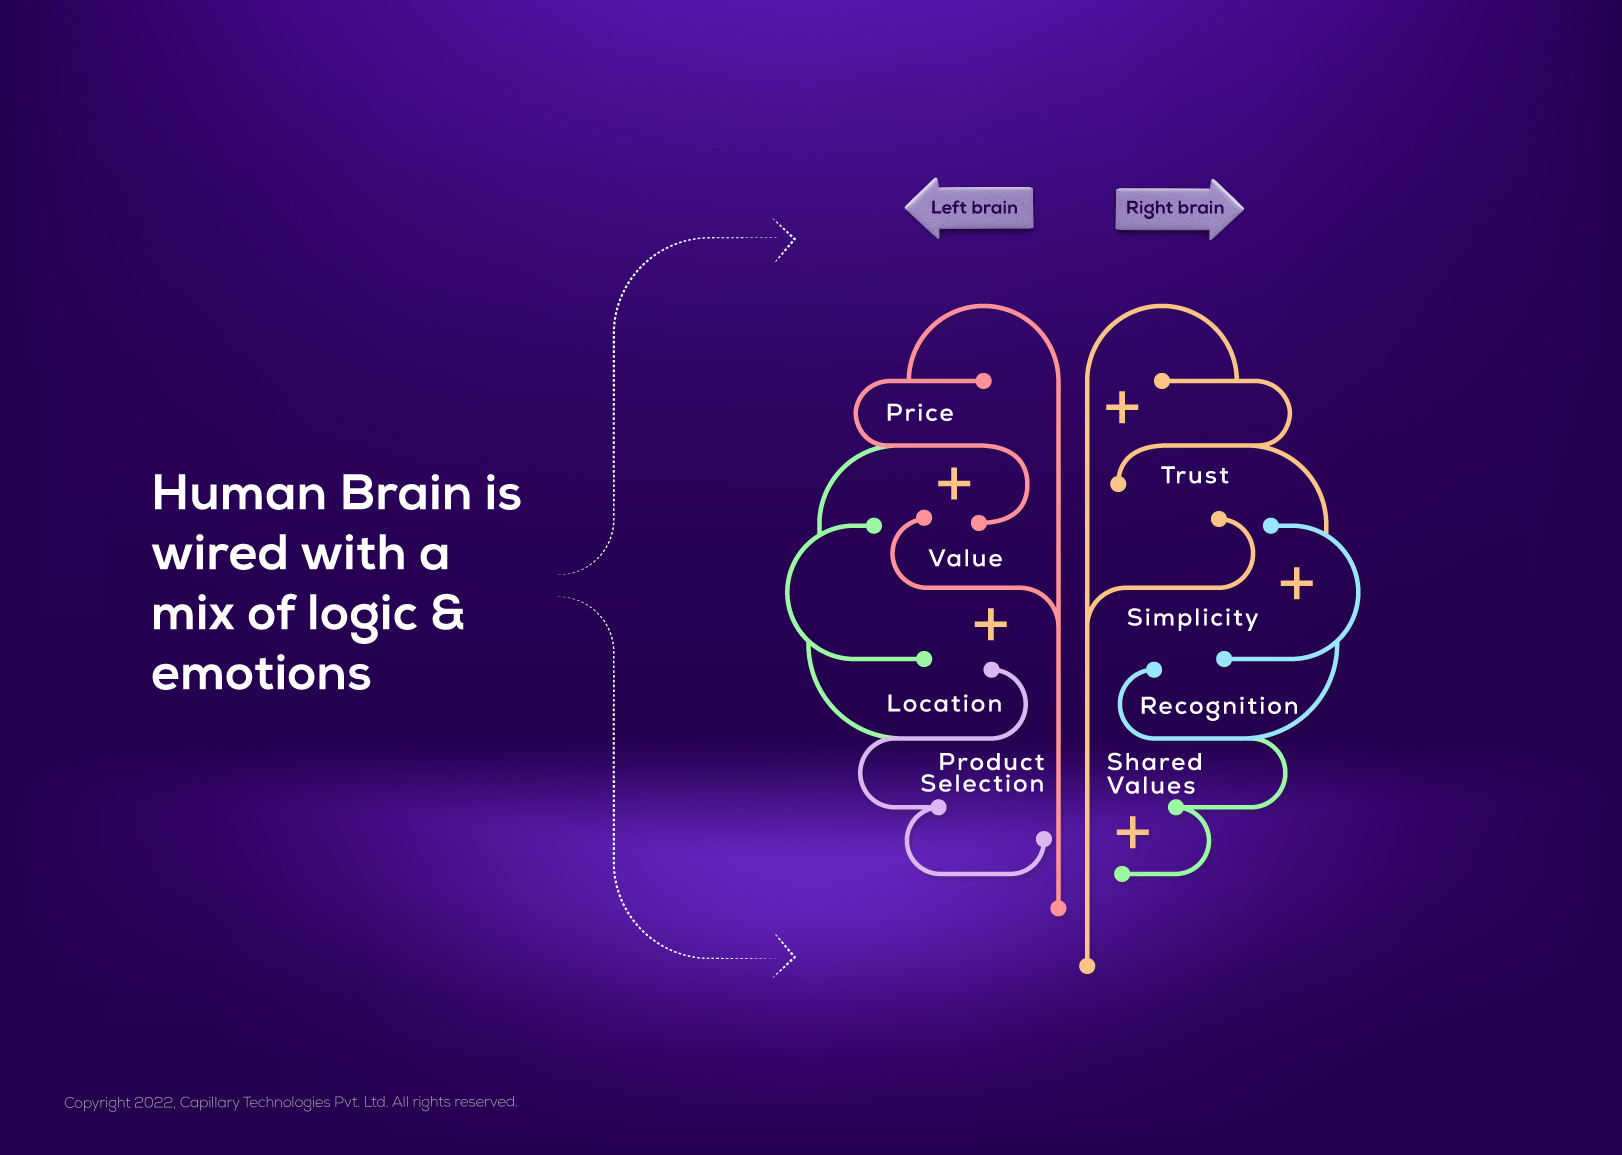 How emotions & logics work for human brain